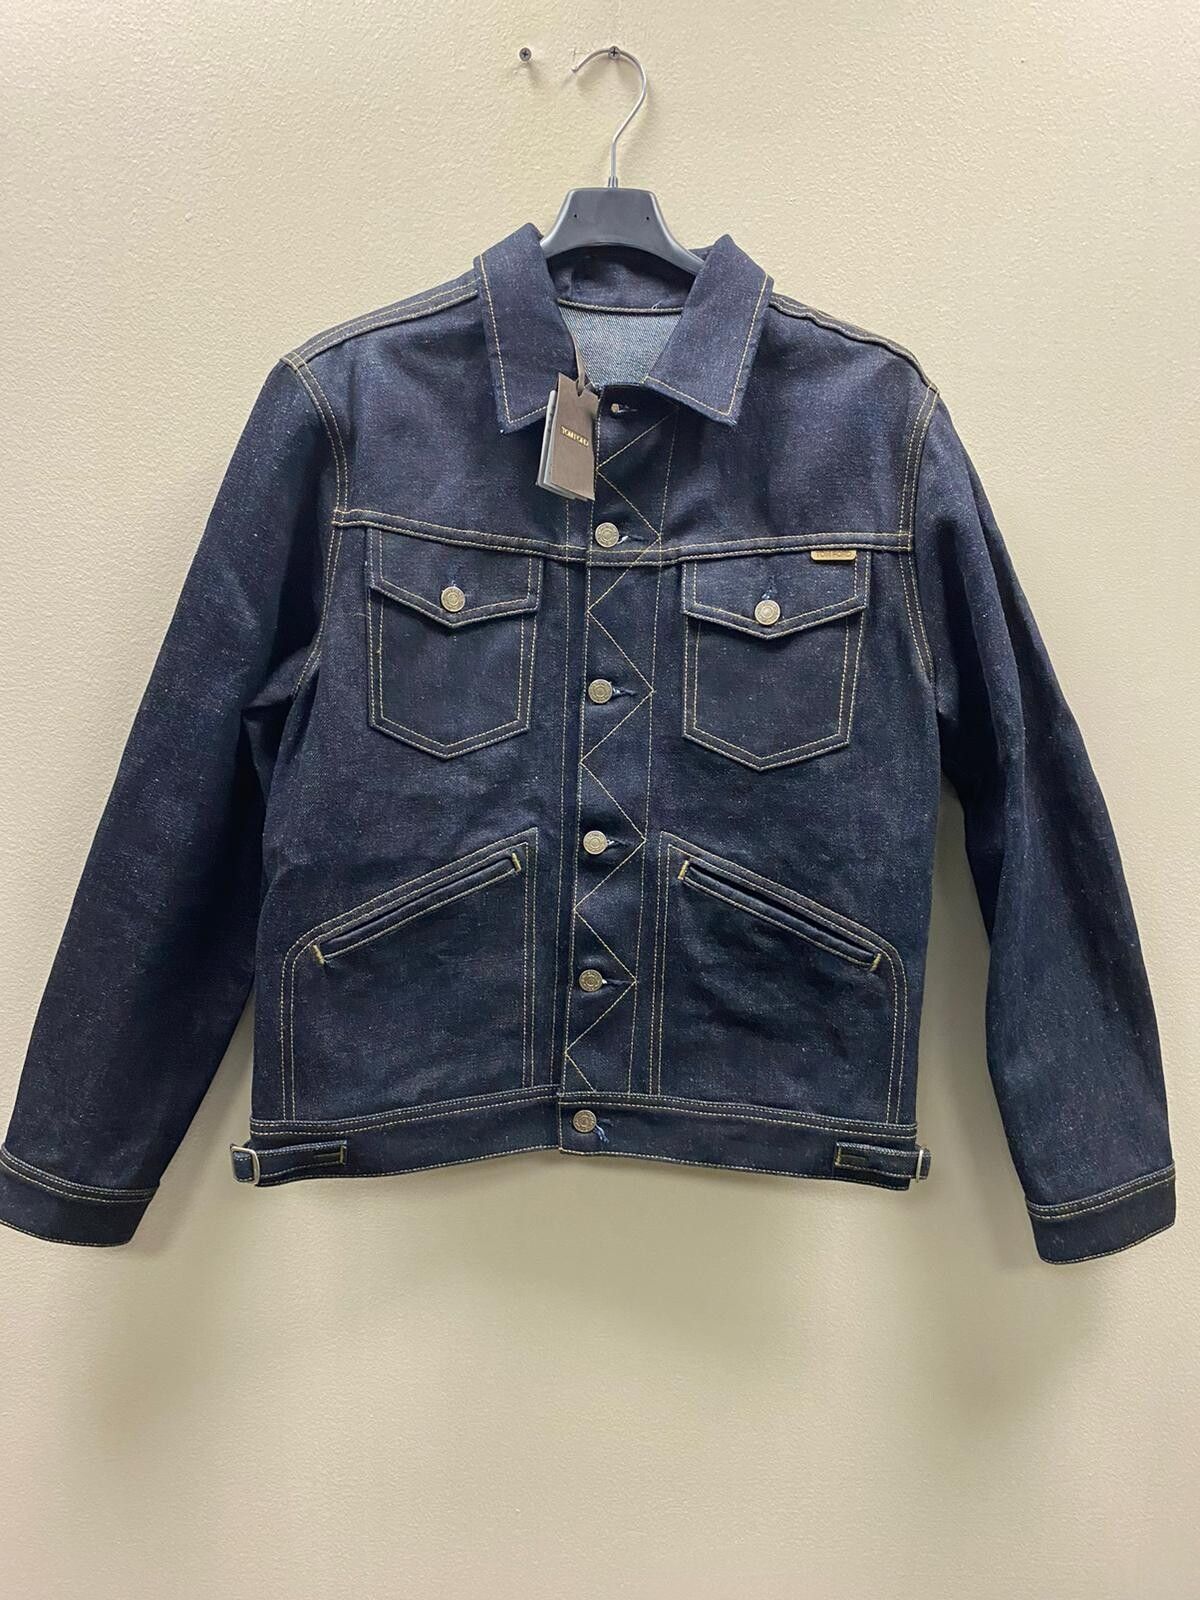 Tom Ford Classic Denim Jacket in Indigo Size US M / EU 48-50 / 2 - 18 Thumbnail